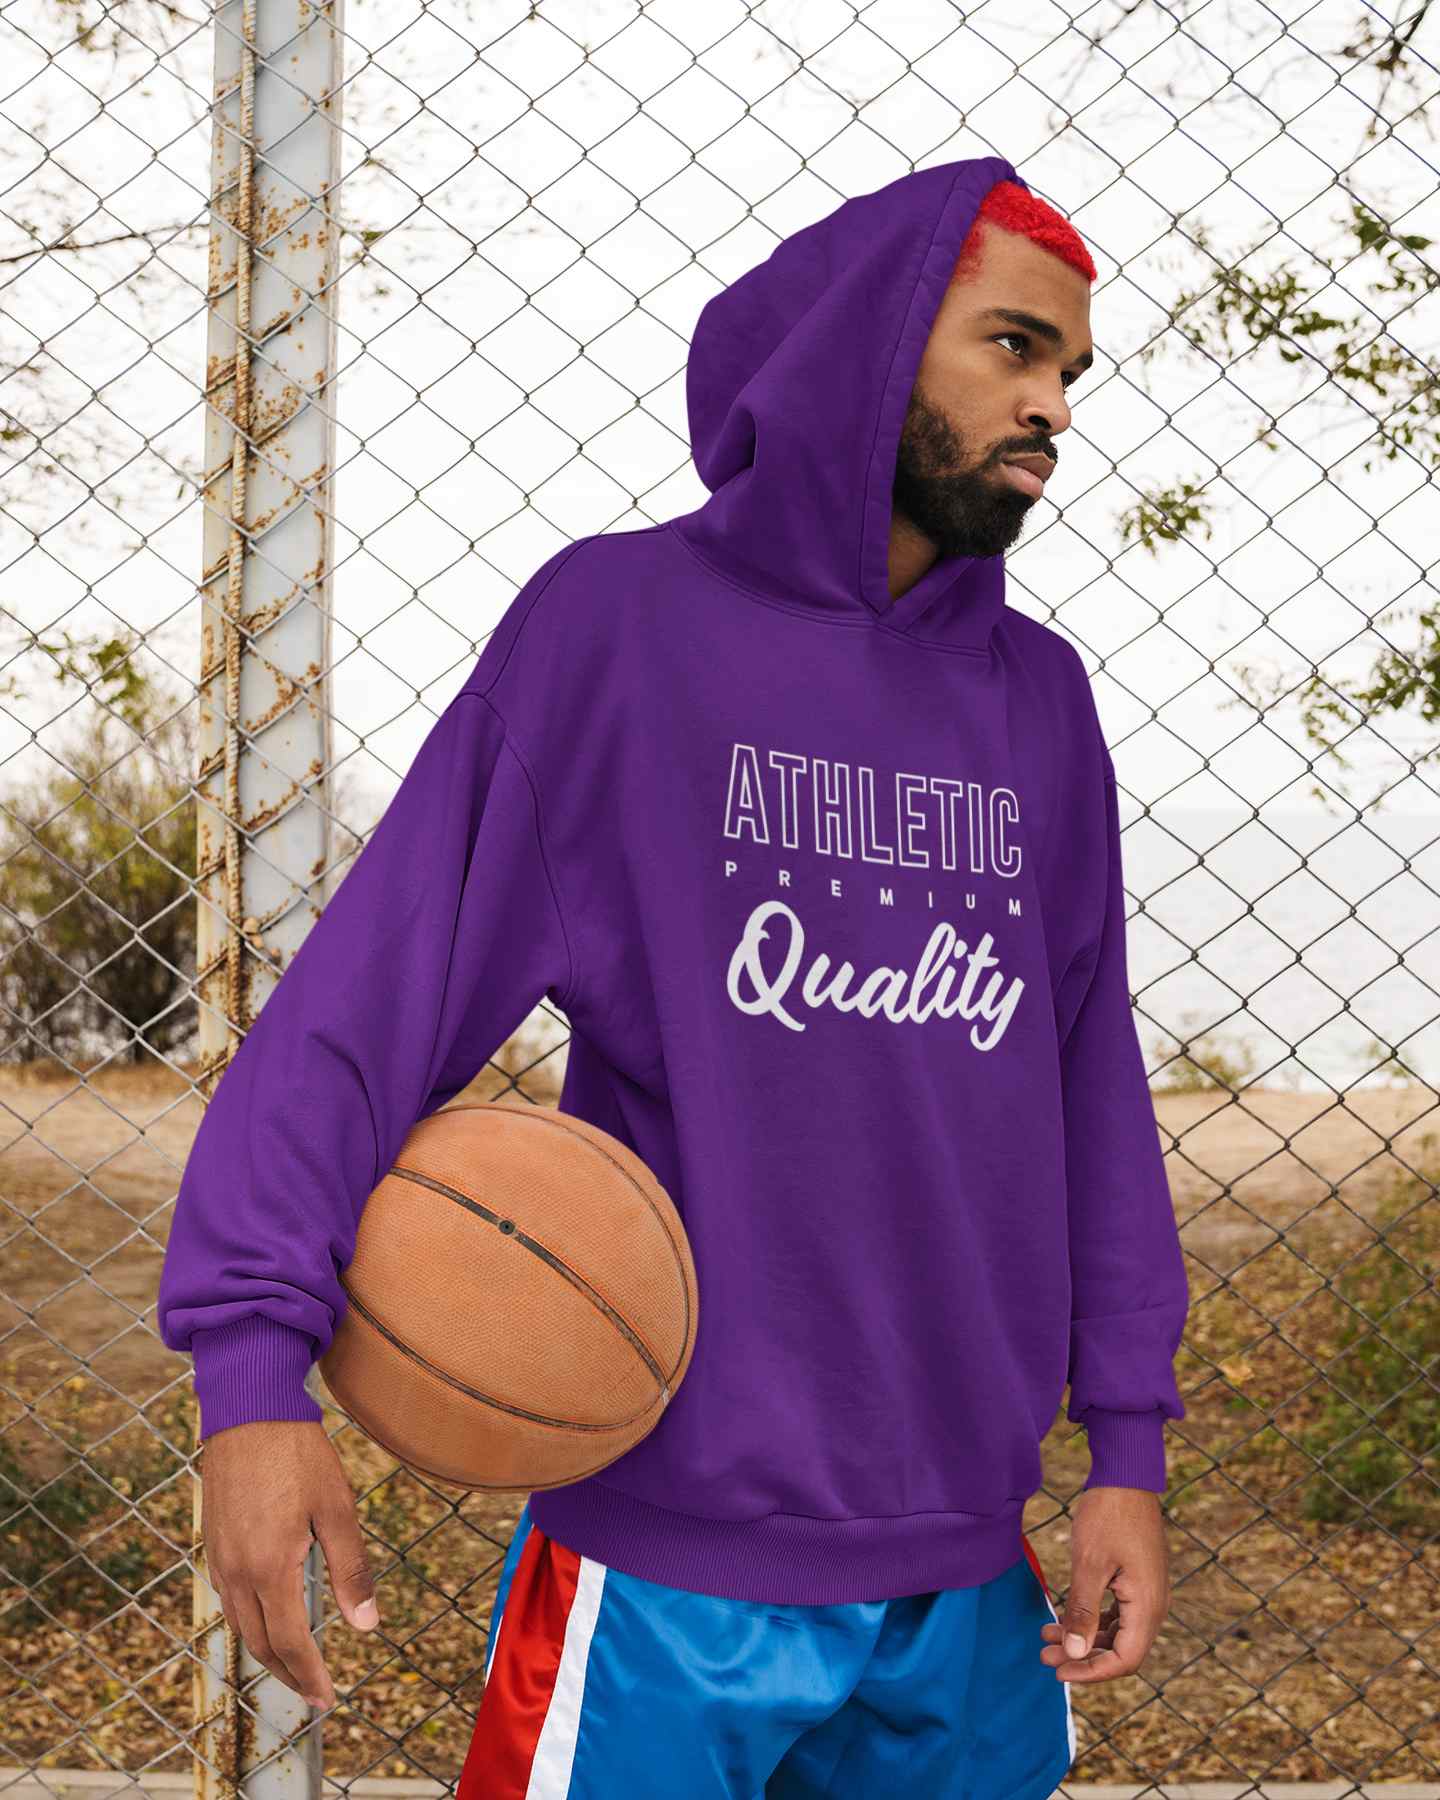 Stylish Hoodies for Men | Athletic Premium Quality Active/Athleisure purple